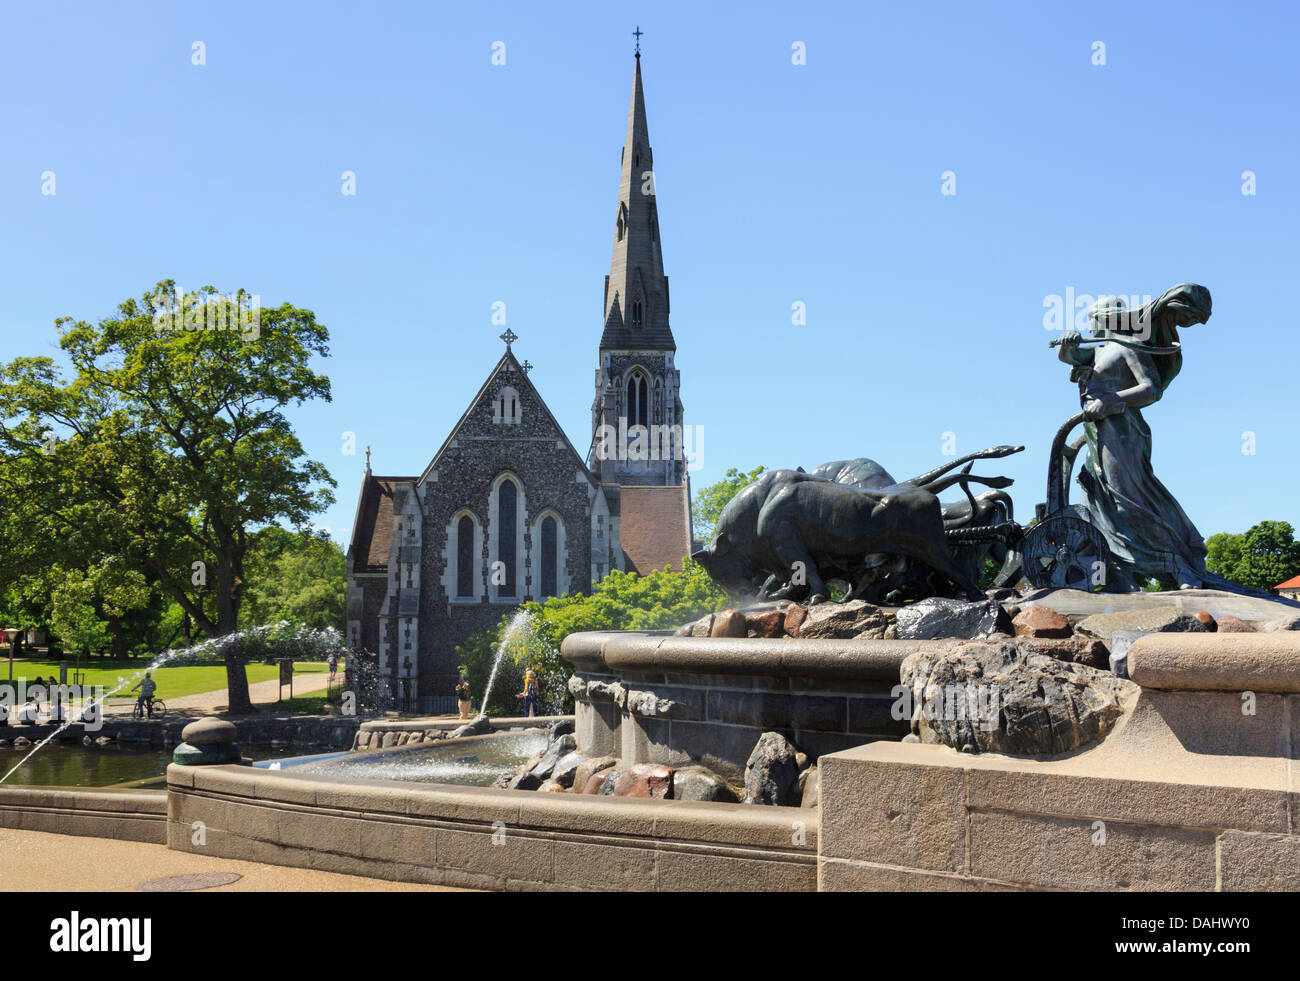 Saint Alban della chiesa anglicana e Fontana Gefion, Gefionspringvandet, in Nordre Toldbod, Copenaghen, Zelanda, Danimarca Foto Stock